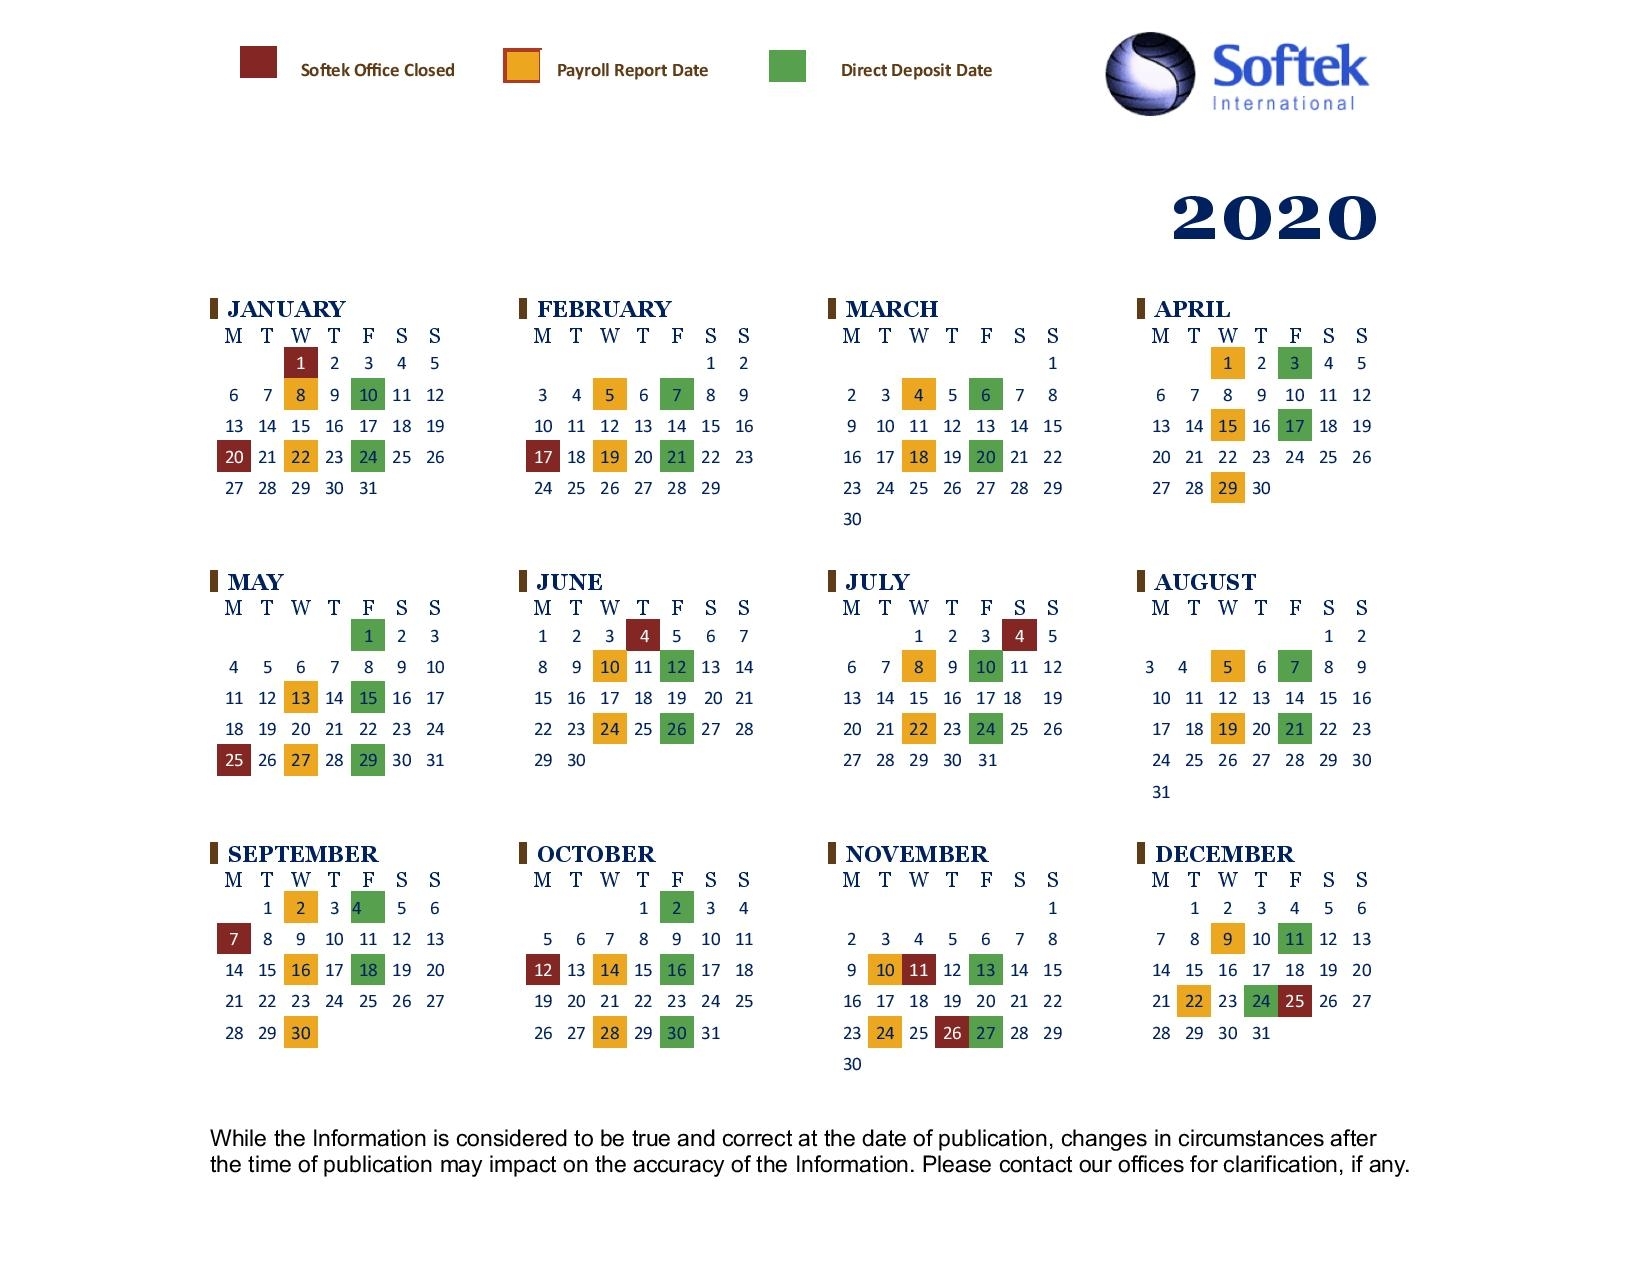 Softek Holiday &amp; Payroll Calendar | Softekintl with regard to Federal Civilian Pay Calendar 2020